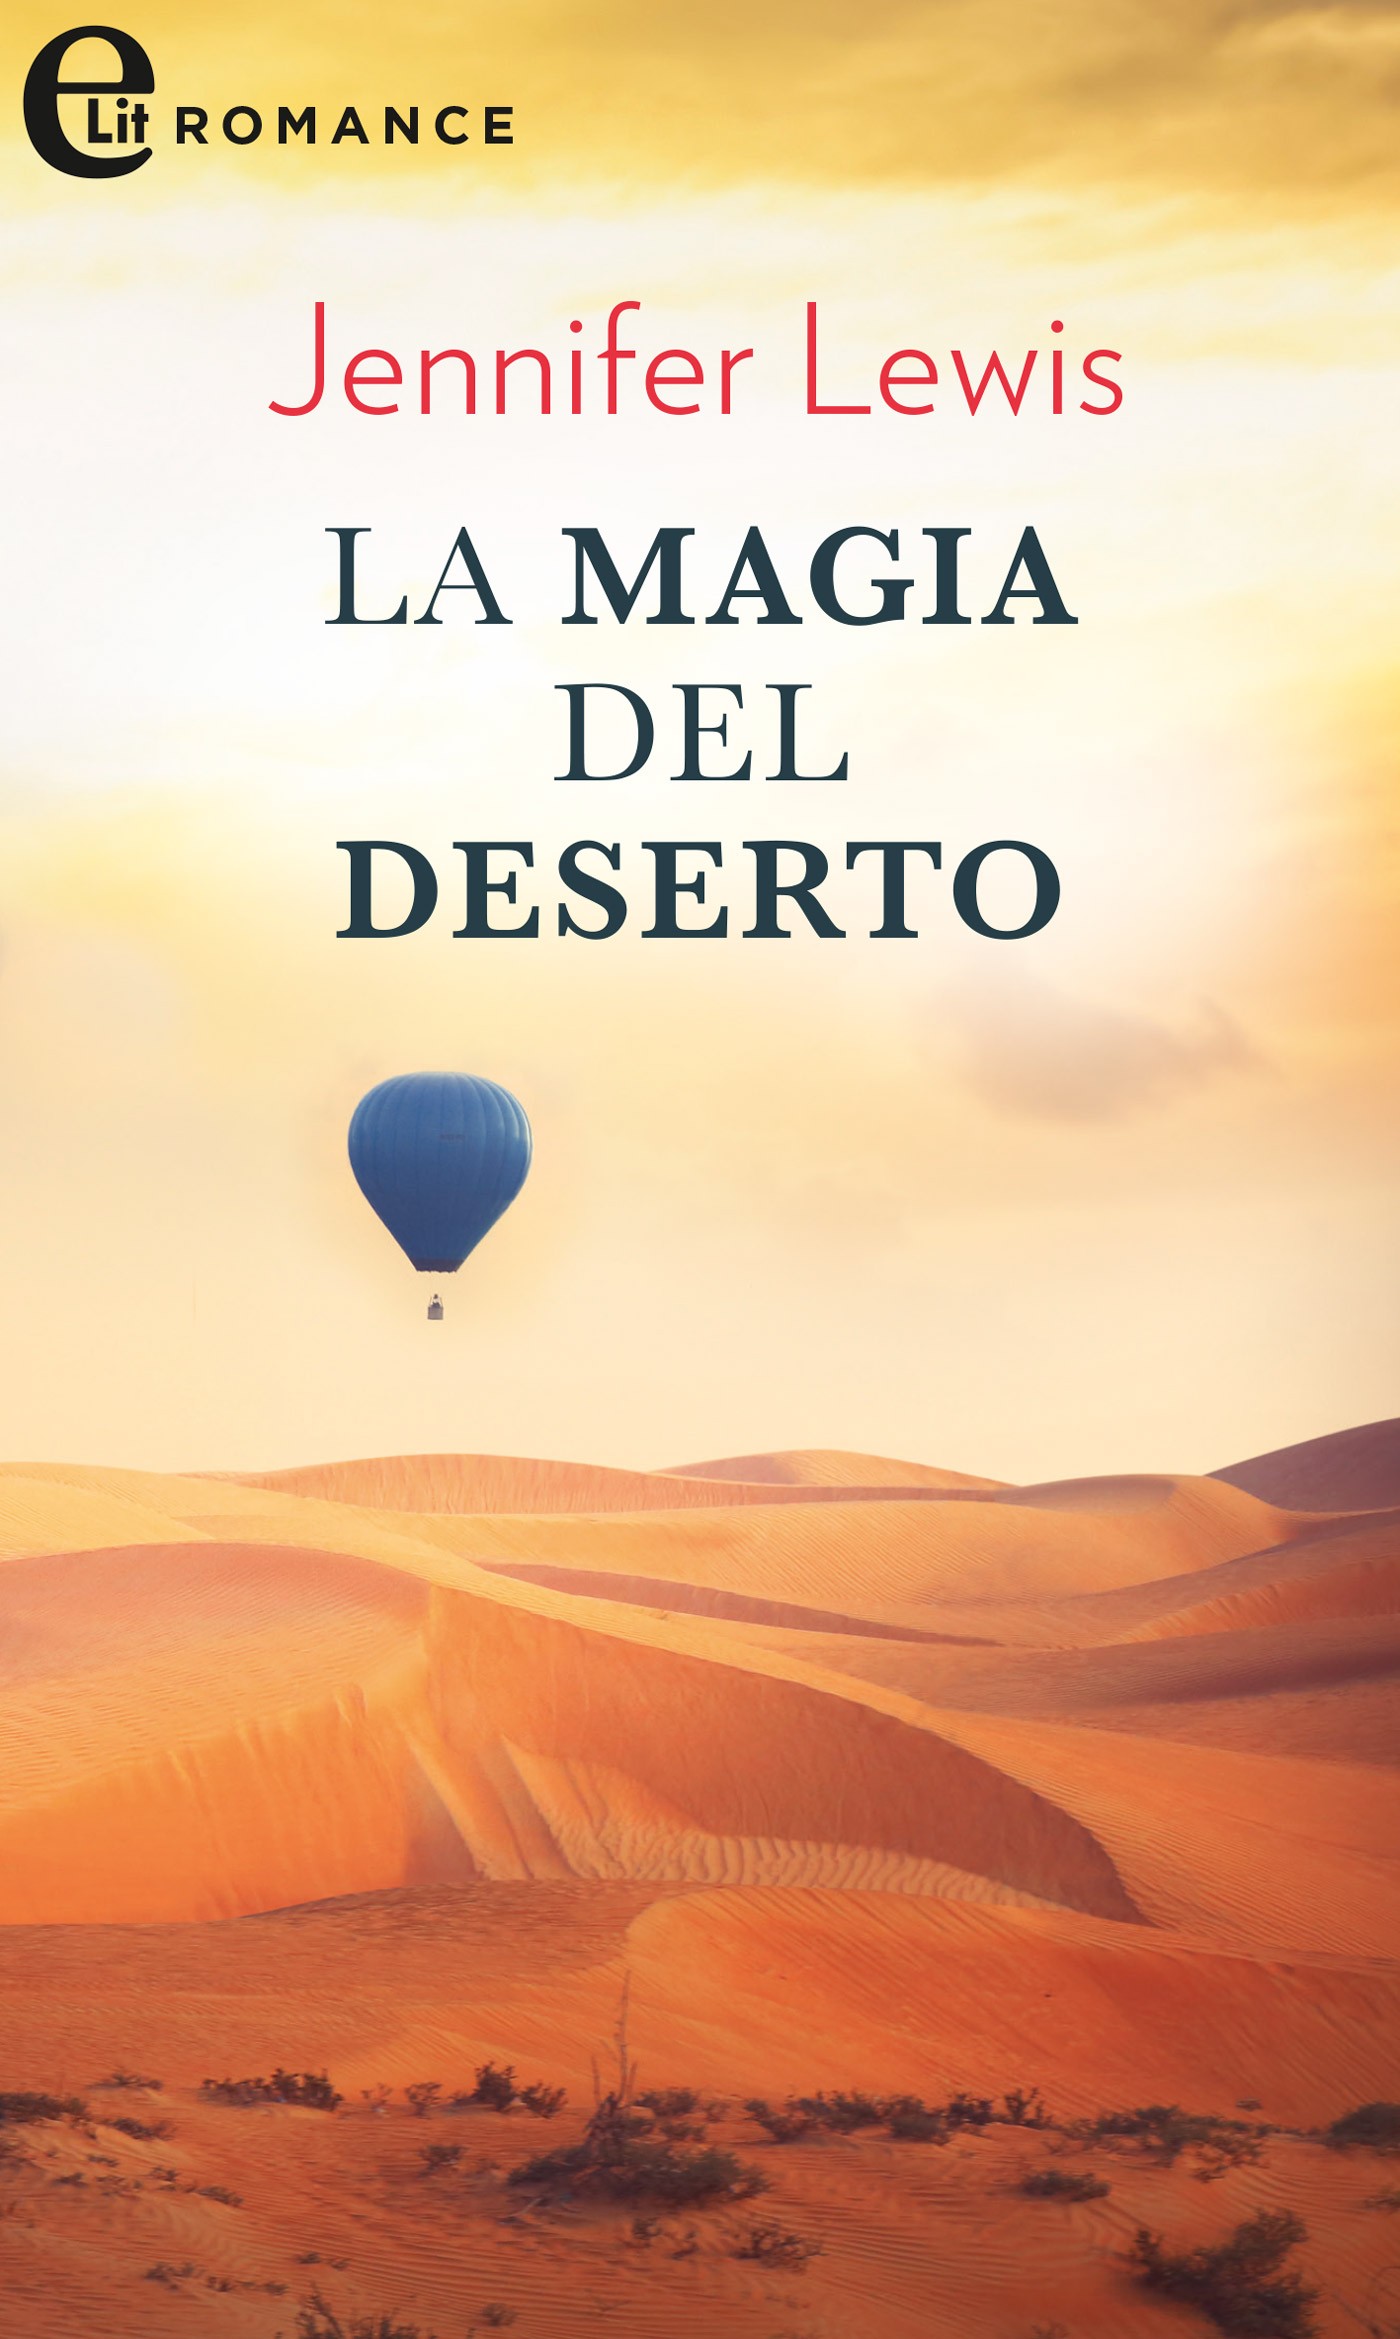 La magia del deserto (eLit) - Librerie.coop